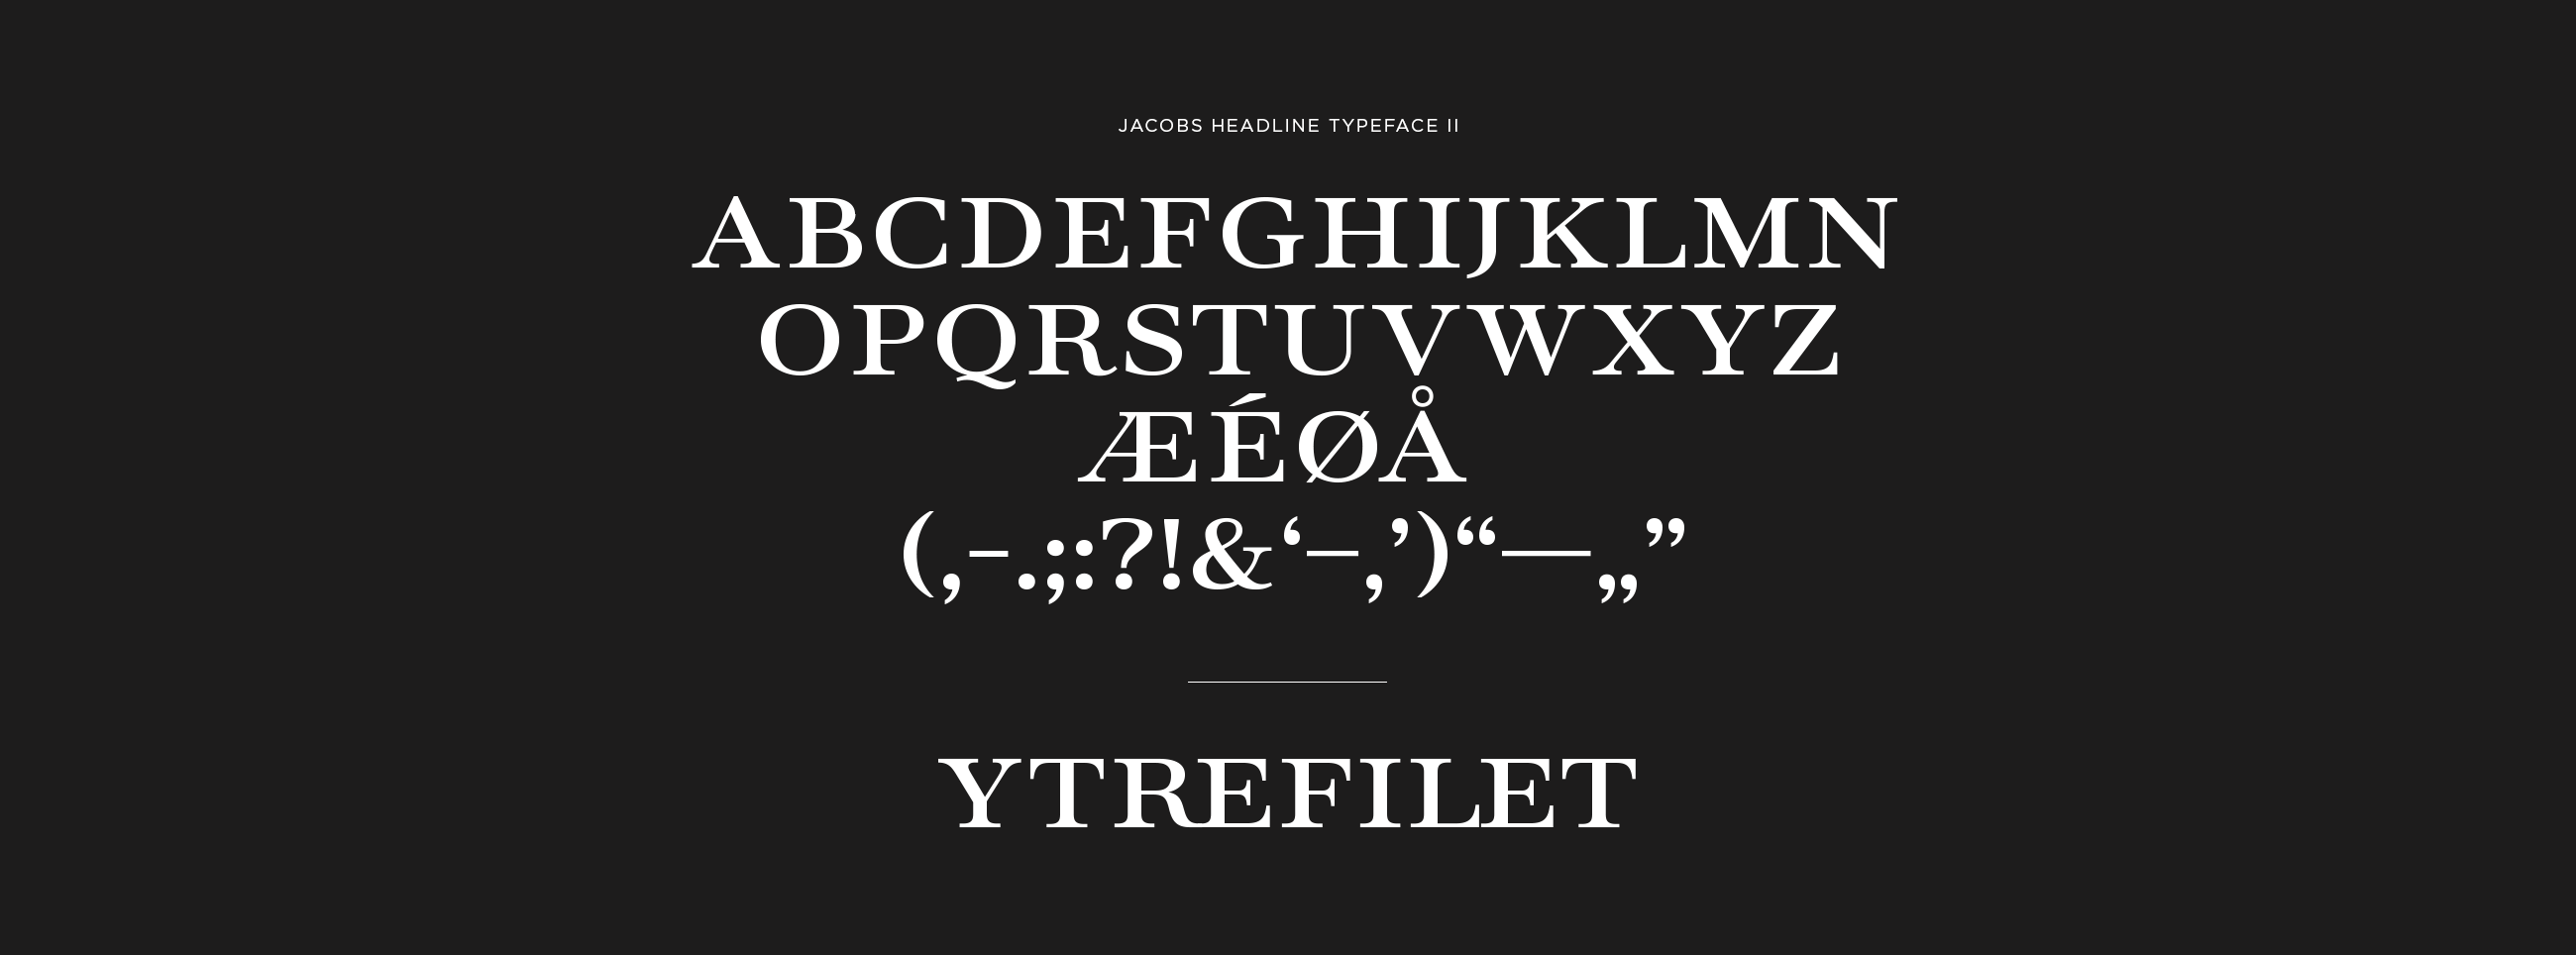 Jacobs Utvalgte typeface font. Visuell identitet visual identity.